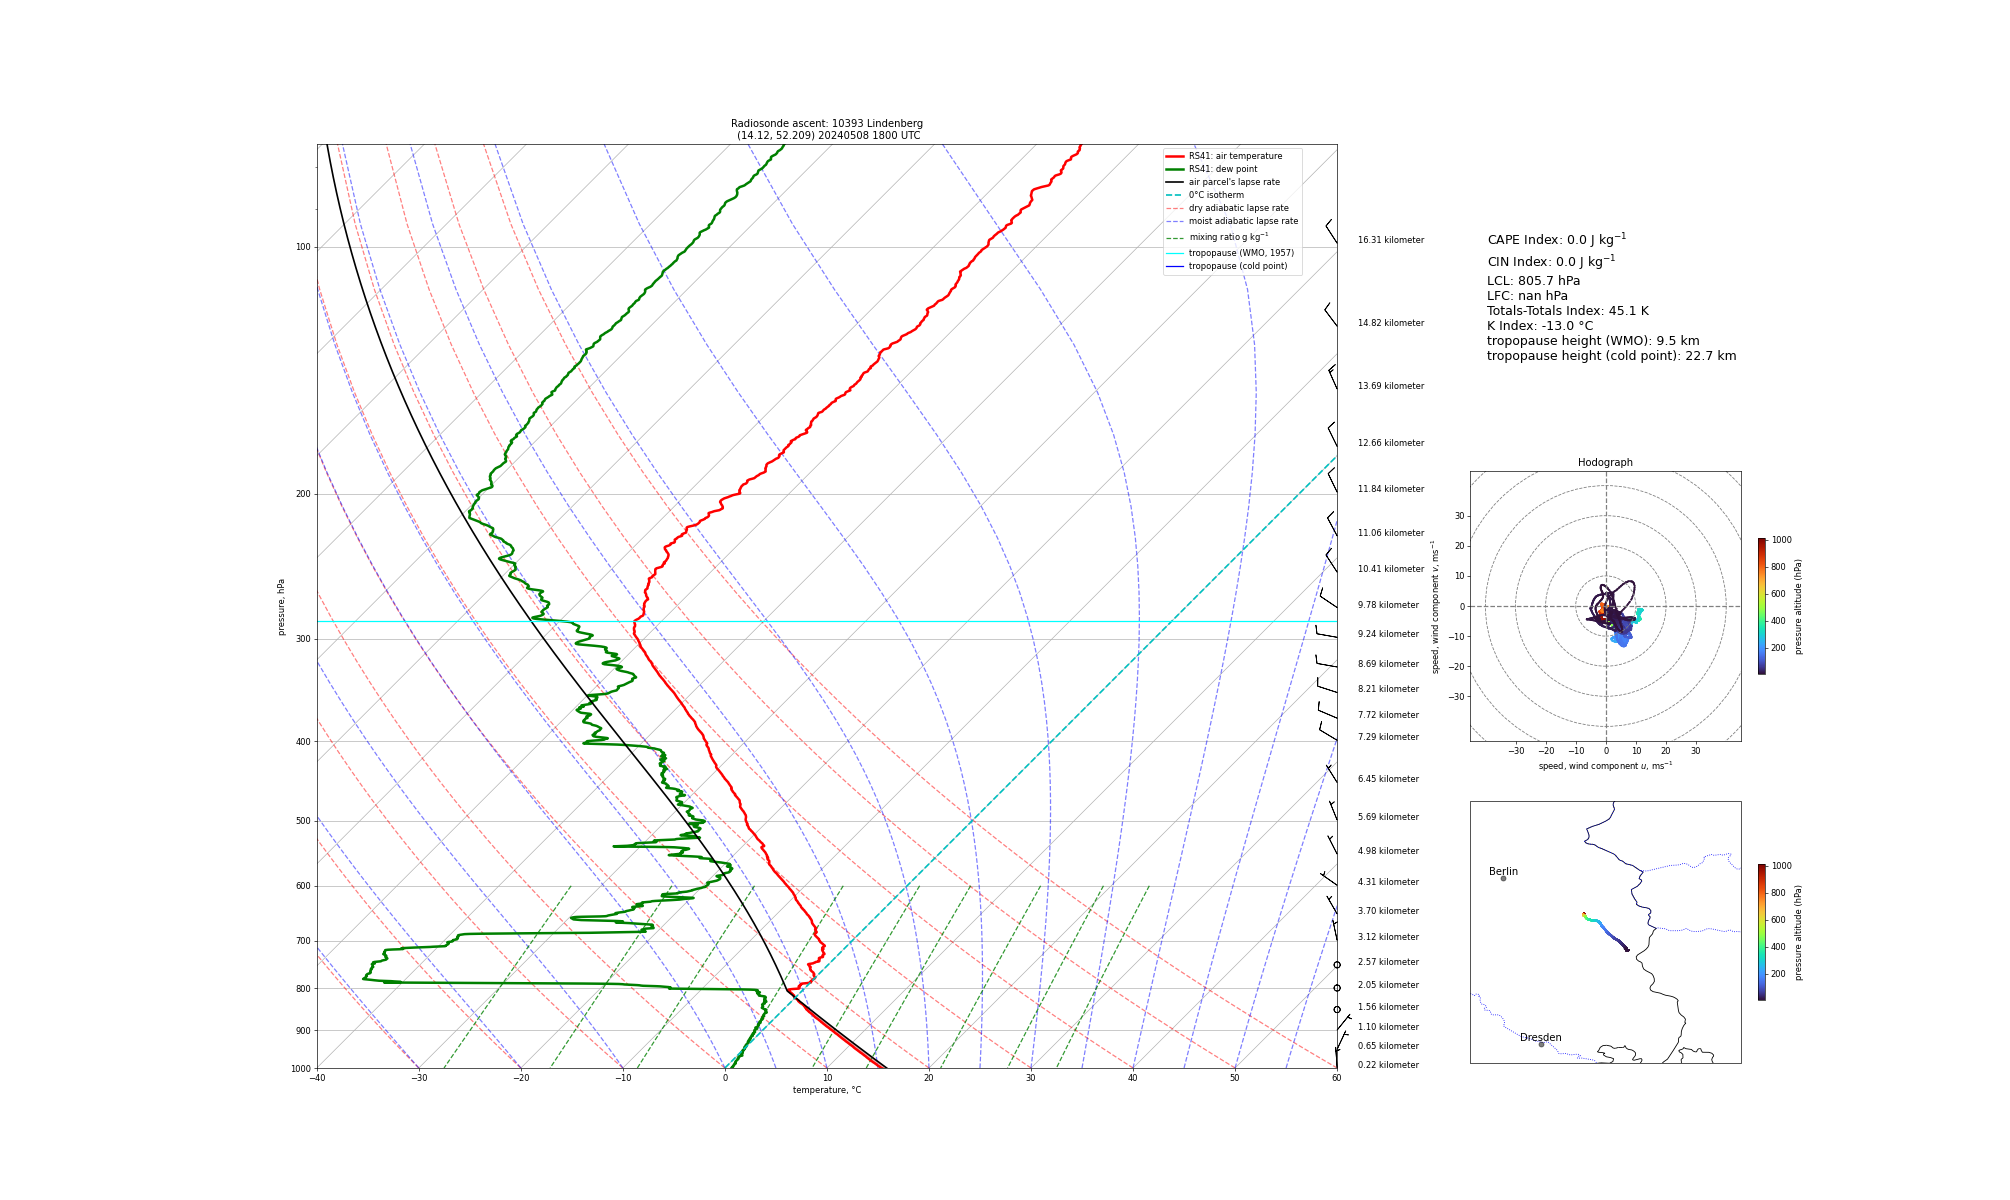 Visualisation of the radiosounding profile at Lindenberg at 1800 UTC